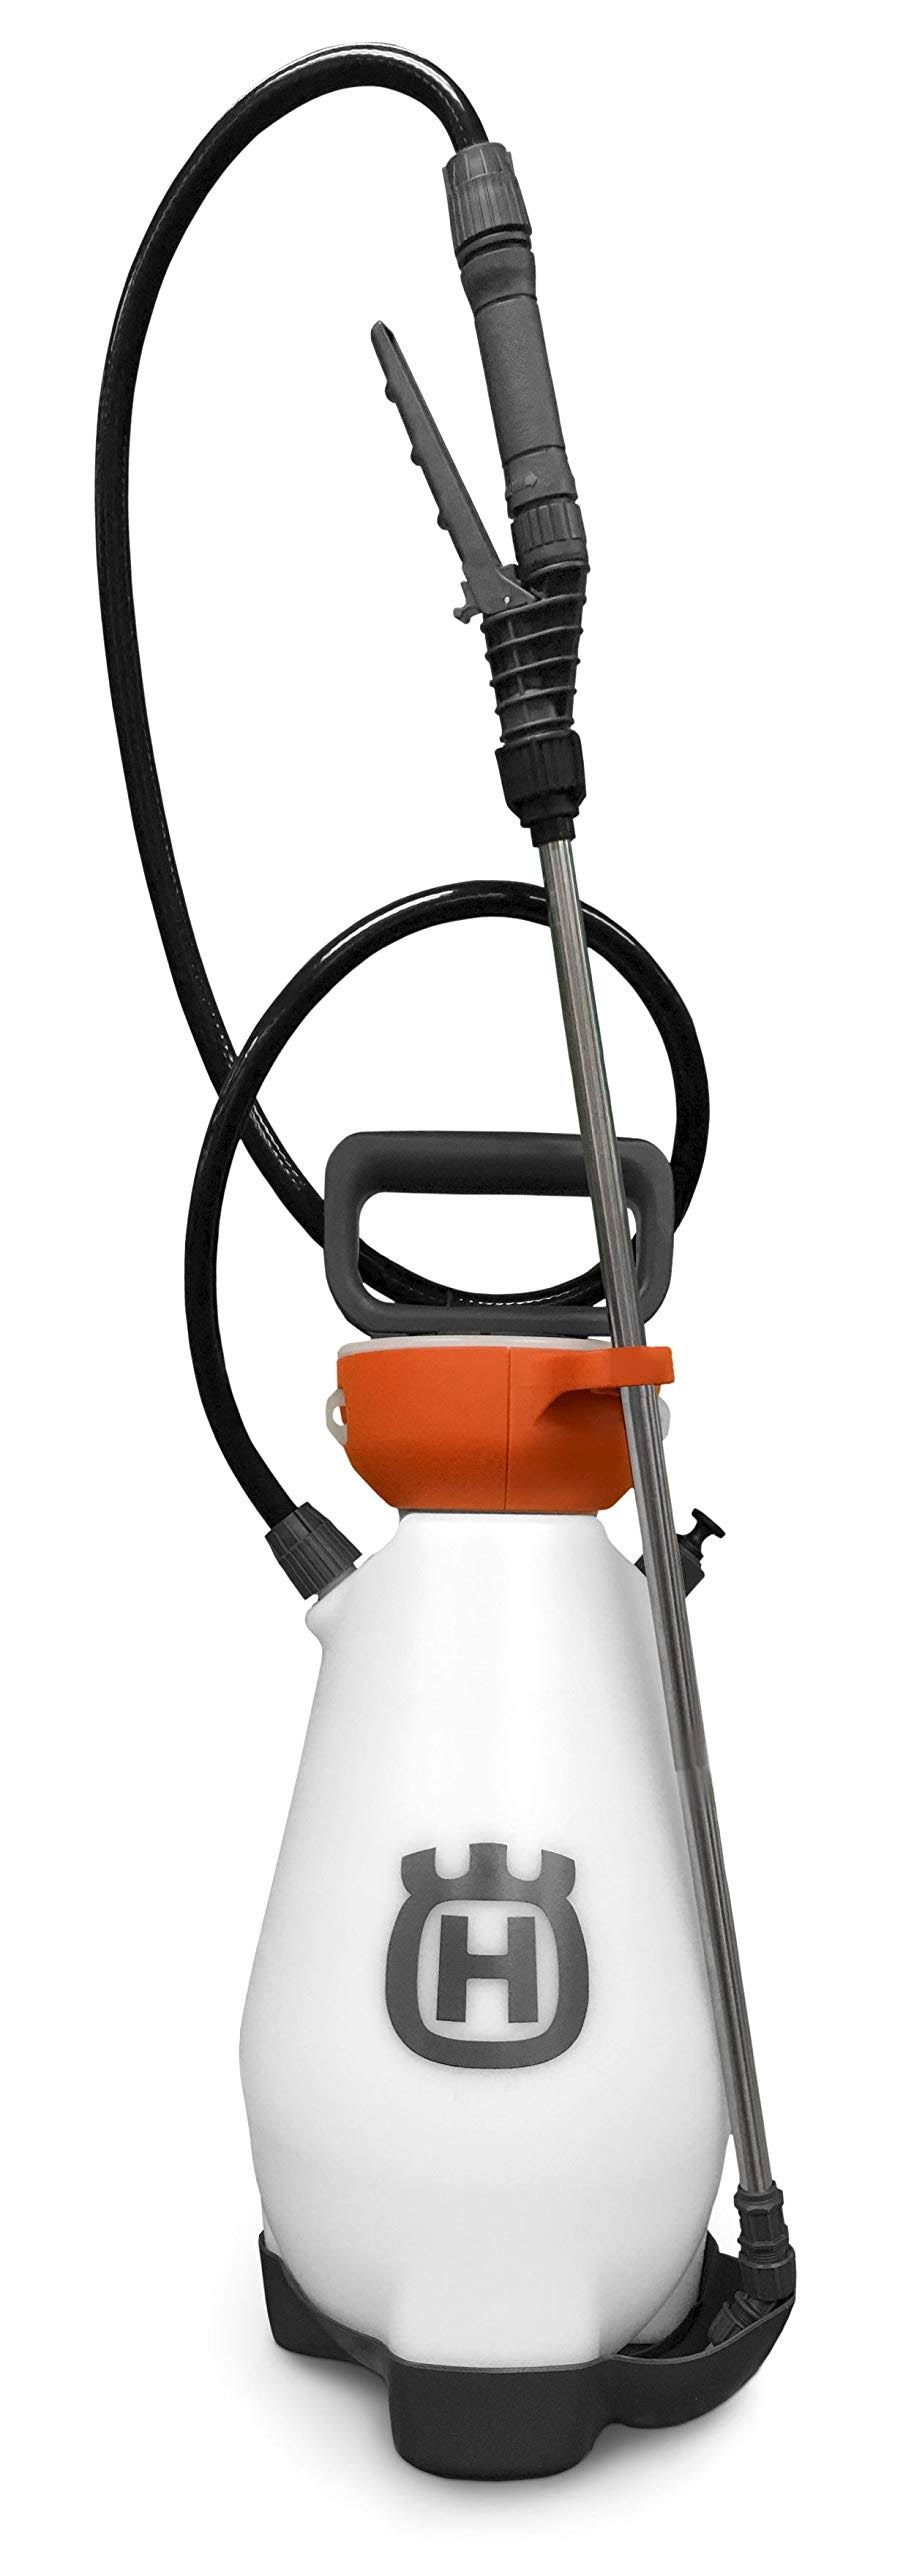 Husqvarna 2 Gallon Handheld Sprayers, Backpack, Orange/Gray